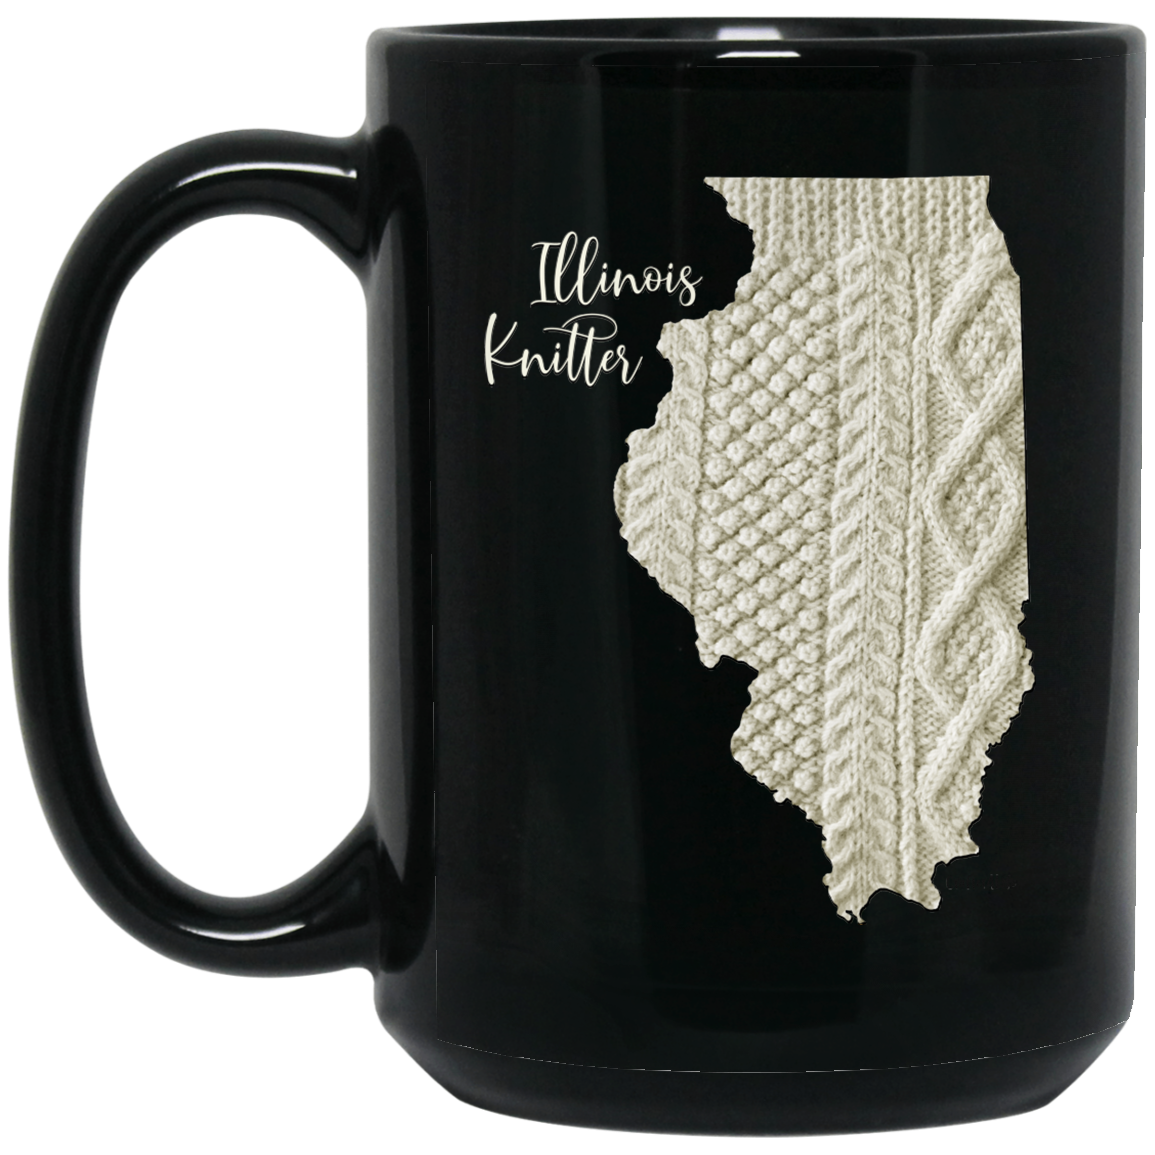 Illinois Knitter Mugs